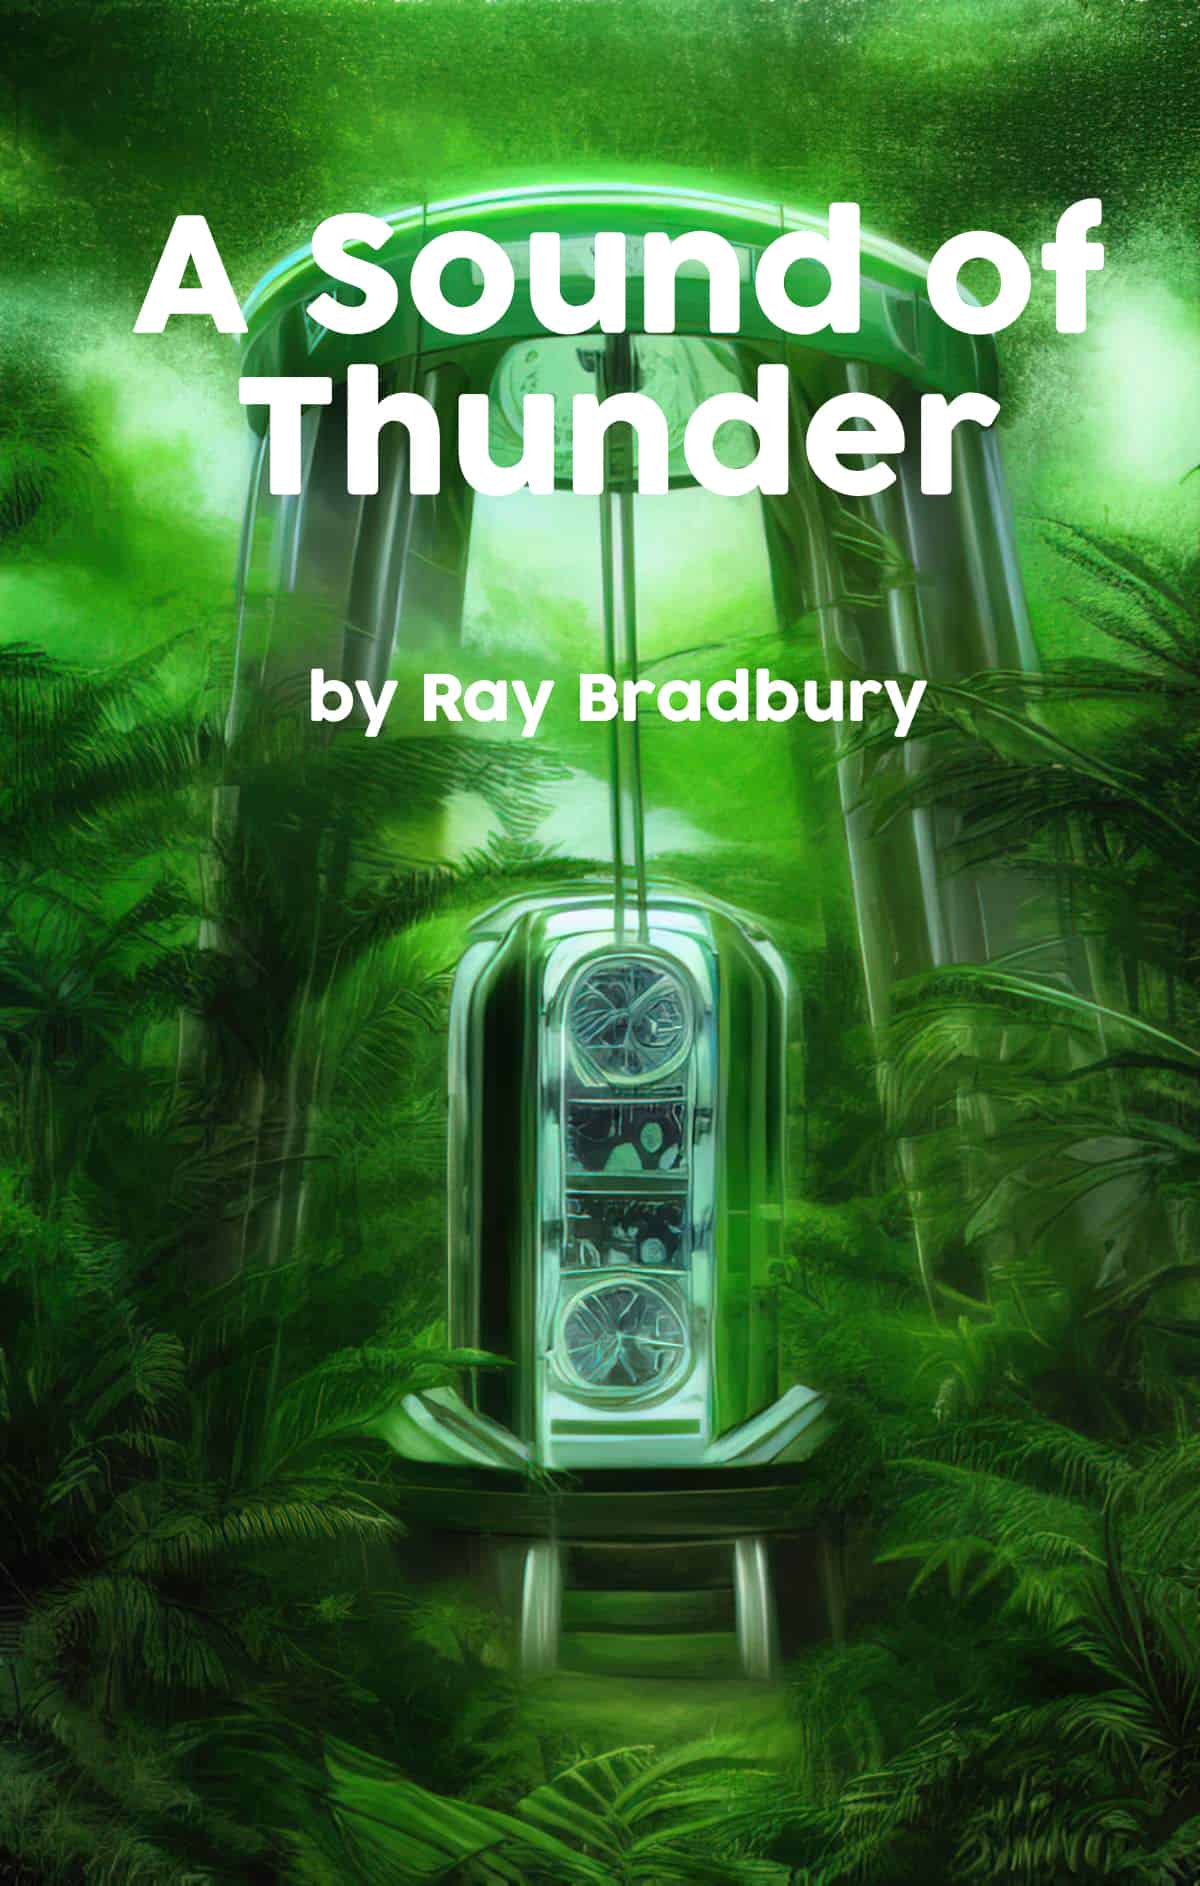 A Sound of Thunder by Ray Bradbury Analysis